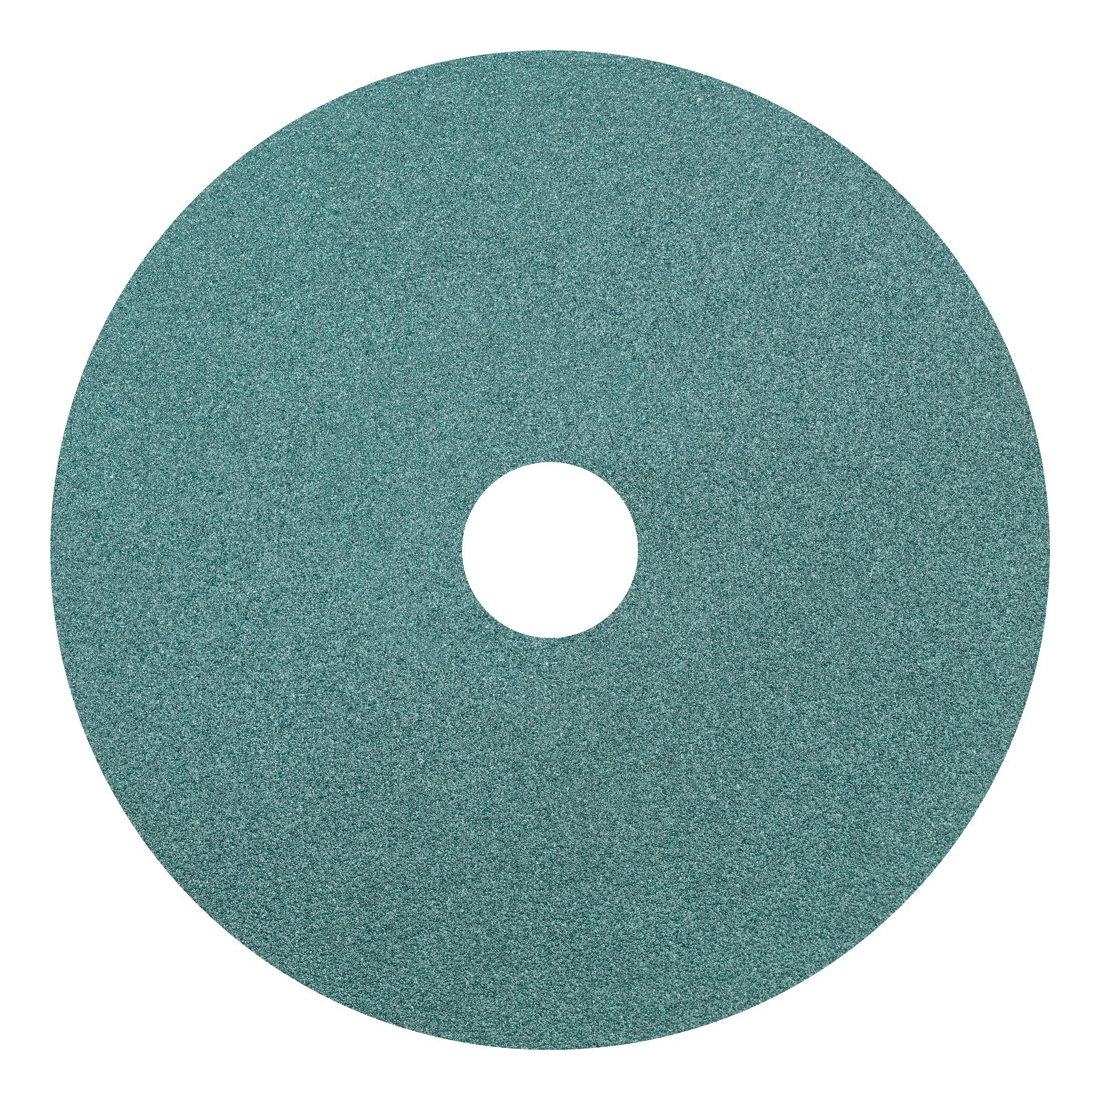 PFERD 62526 Standard Coated Abrasive Disc, 5 in Dia, 7/8 in Center Hole, 80 Grit, Zirconia Alumina Abrasive, Arbor Attachment